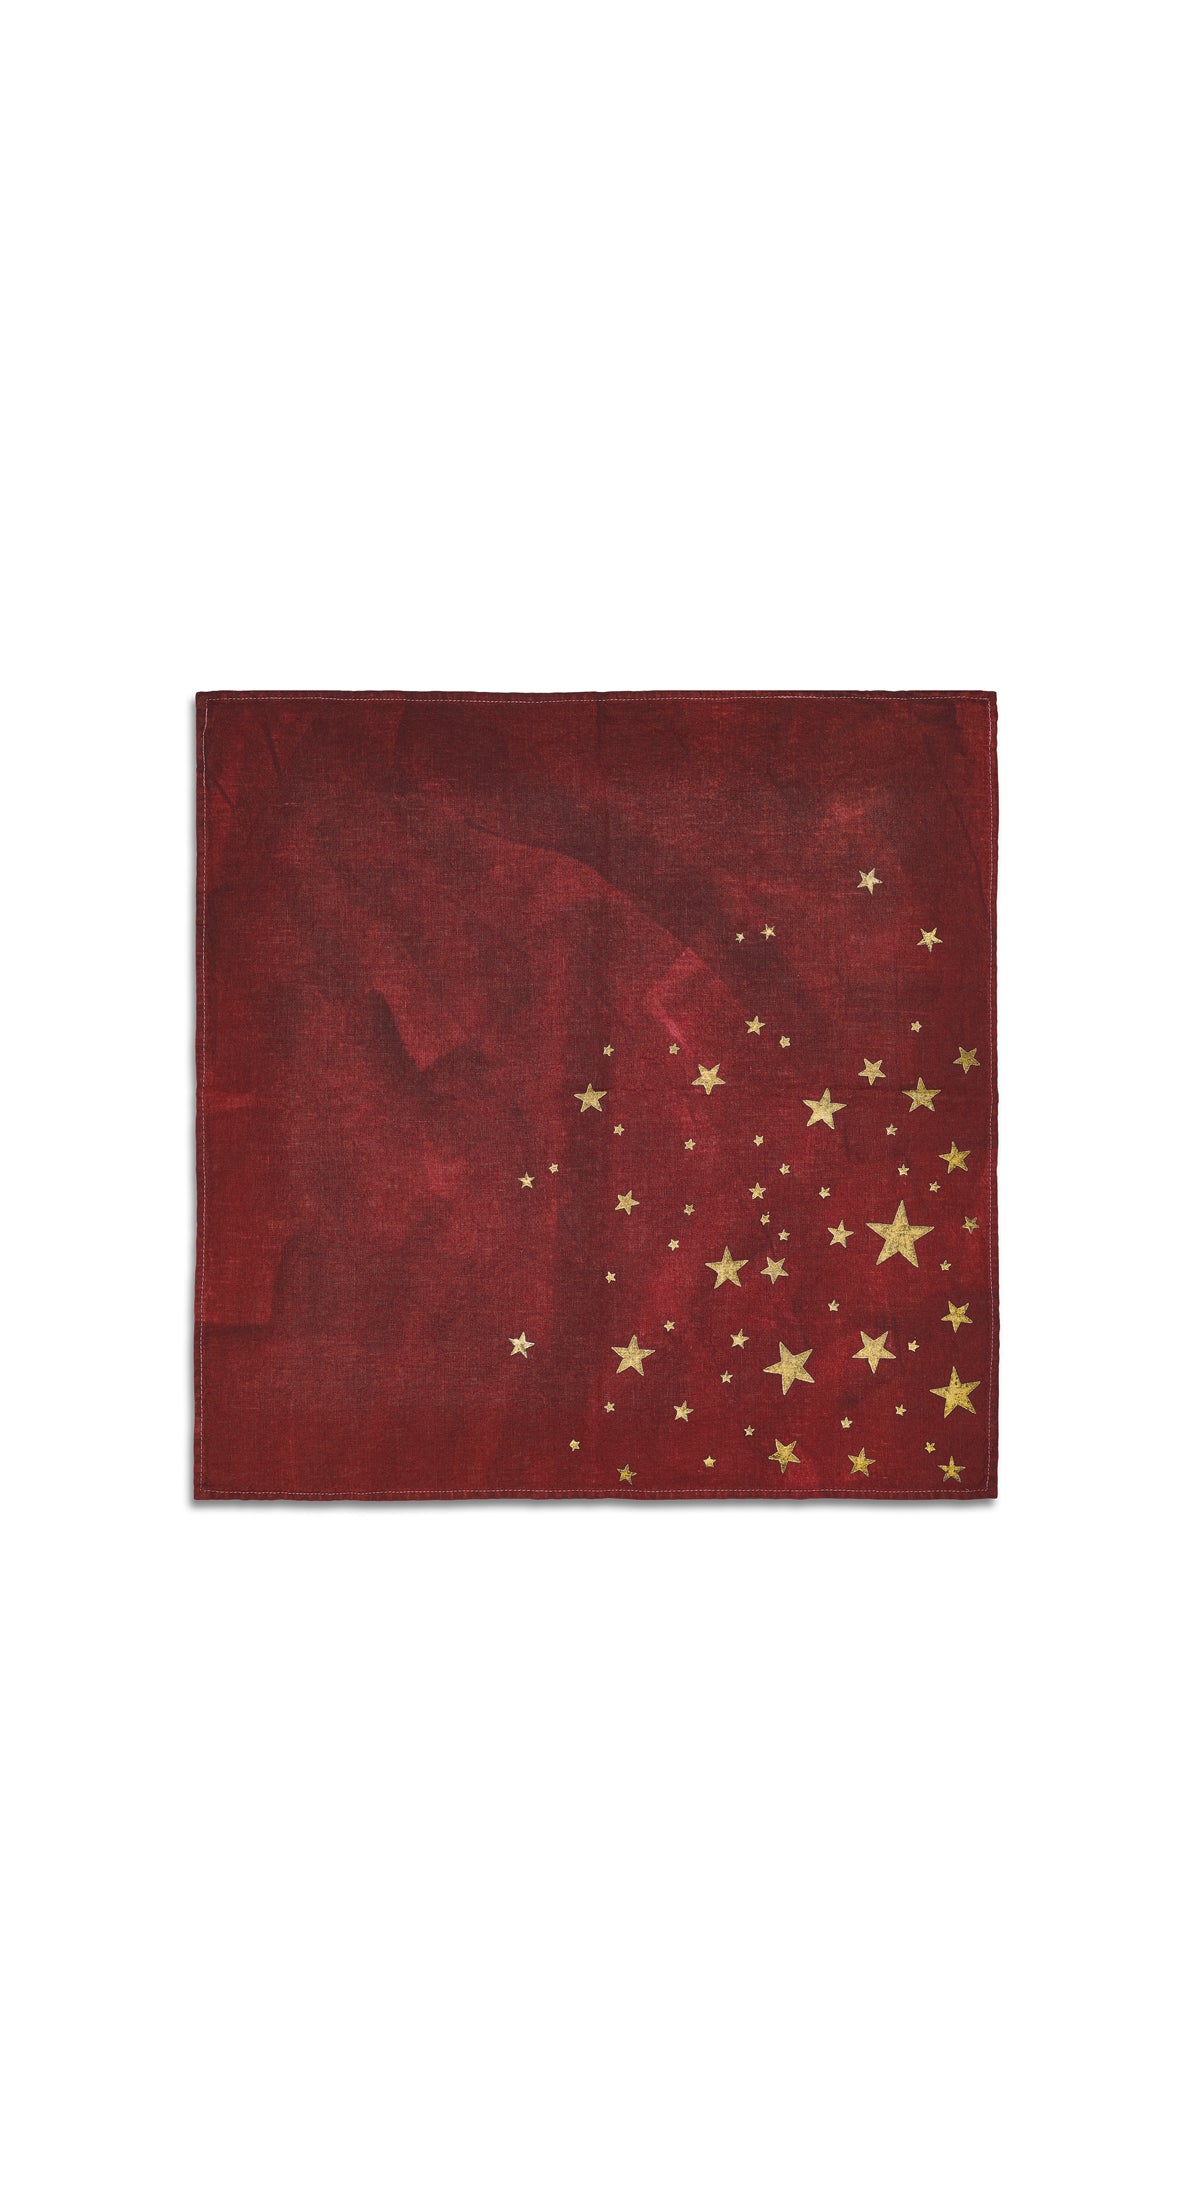 Falling Stars Linen Napkin in Claret Red, 50x50cm